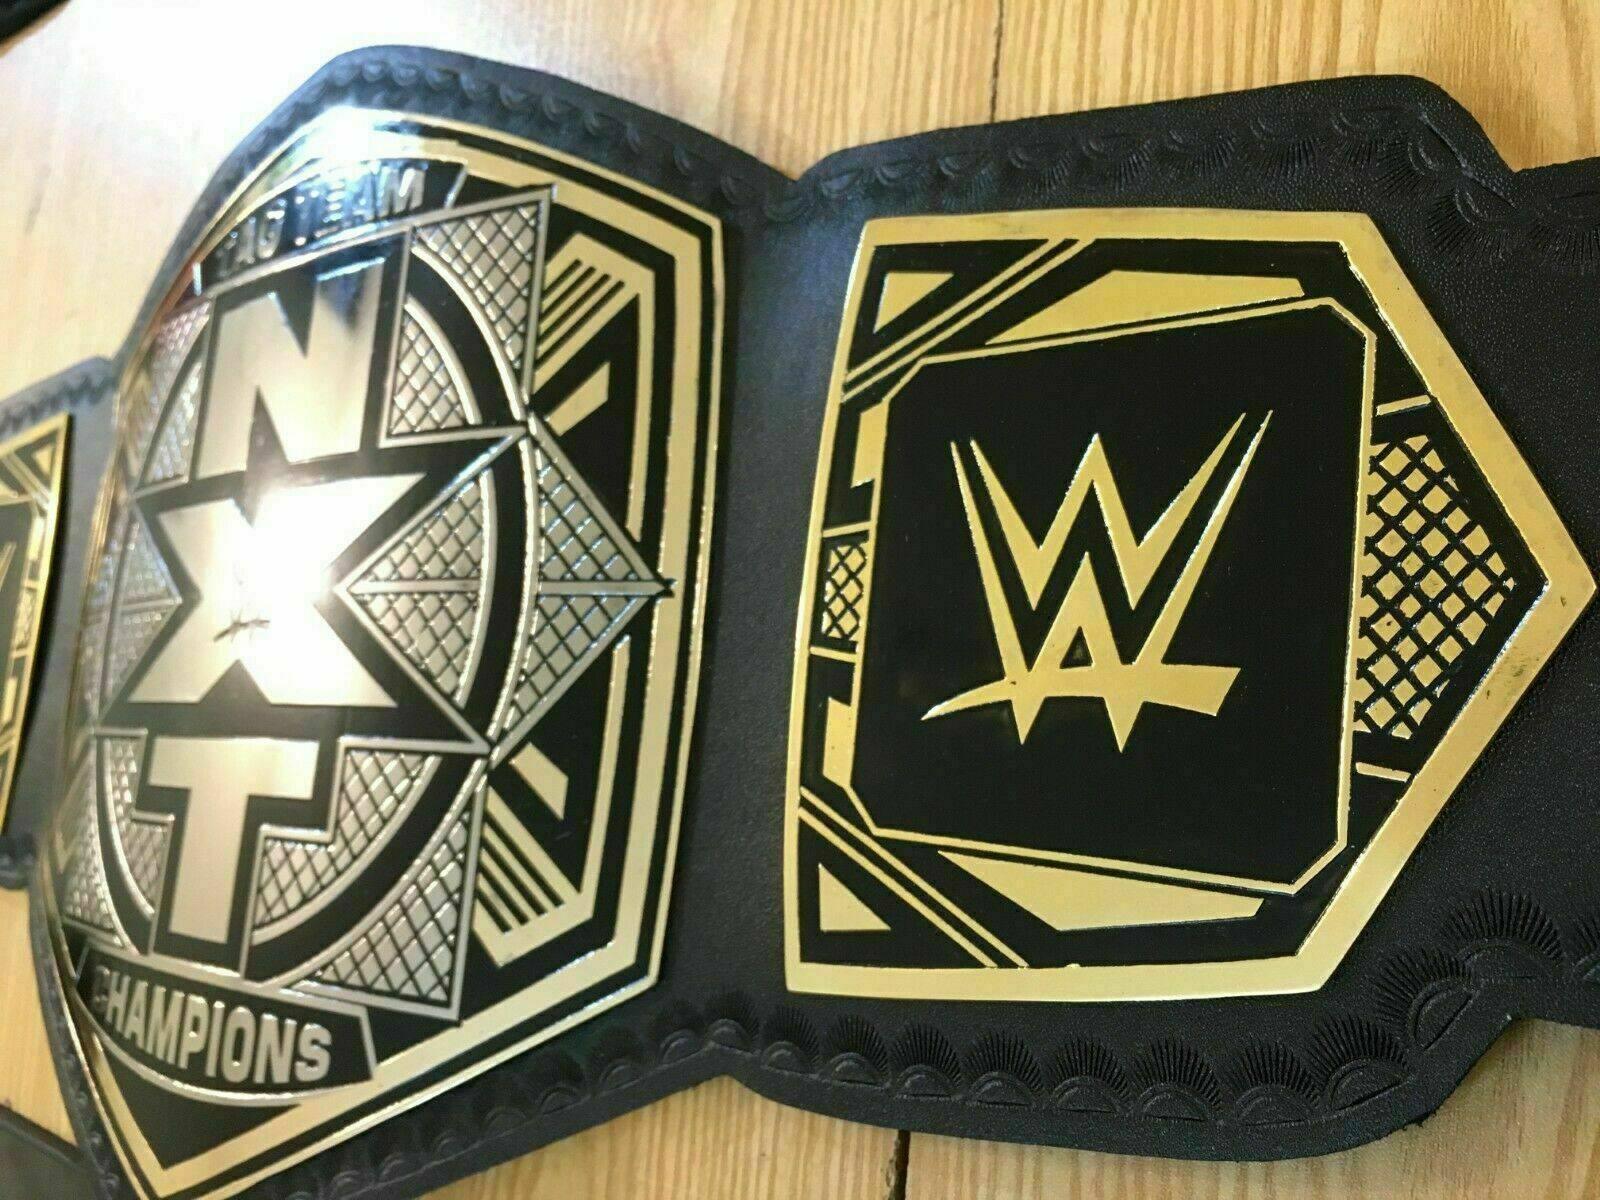 WWE NXT TAG TEAM Brass Championship Belt - Zees Belts